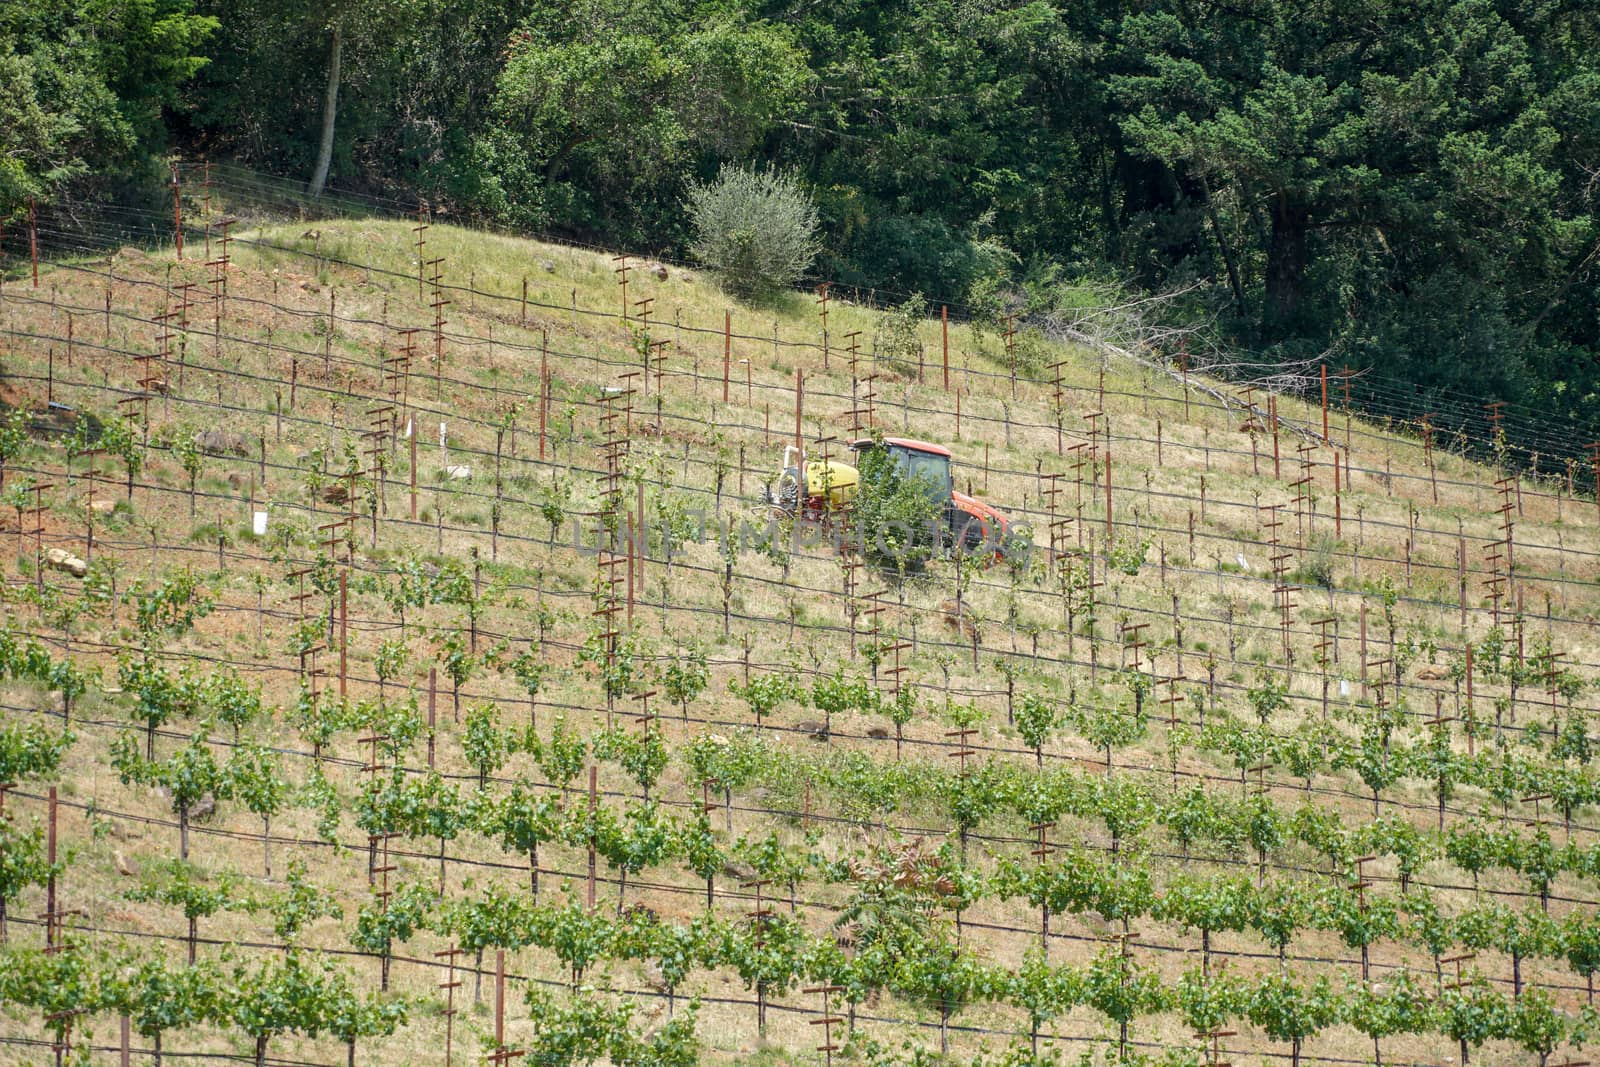 Vineyard in Napa Valley. Napa County, in California's Wine Country. Vineyards landscape.